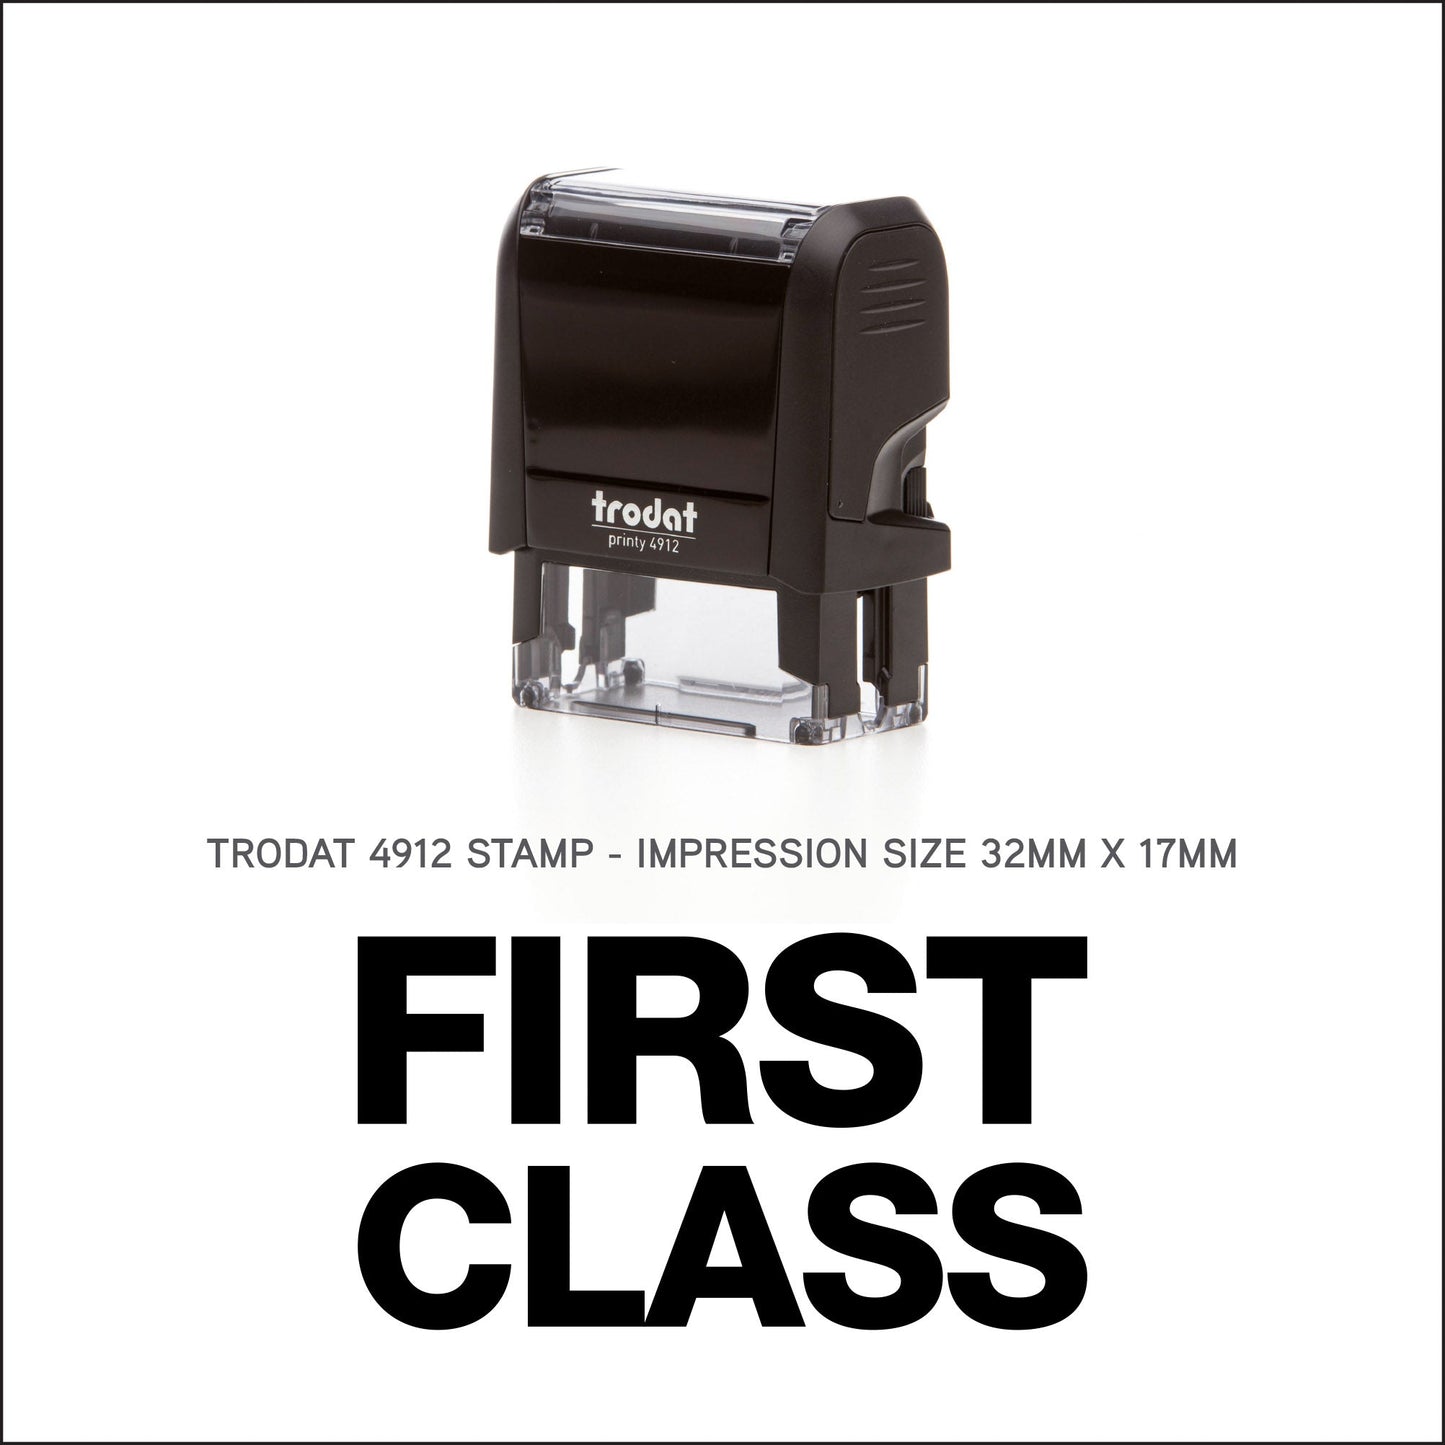 First Class - Rubber Stamp - Trodat 4912 - 32mm x 17mm Impression